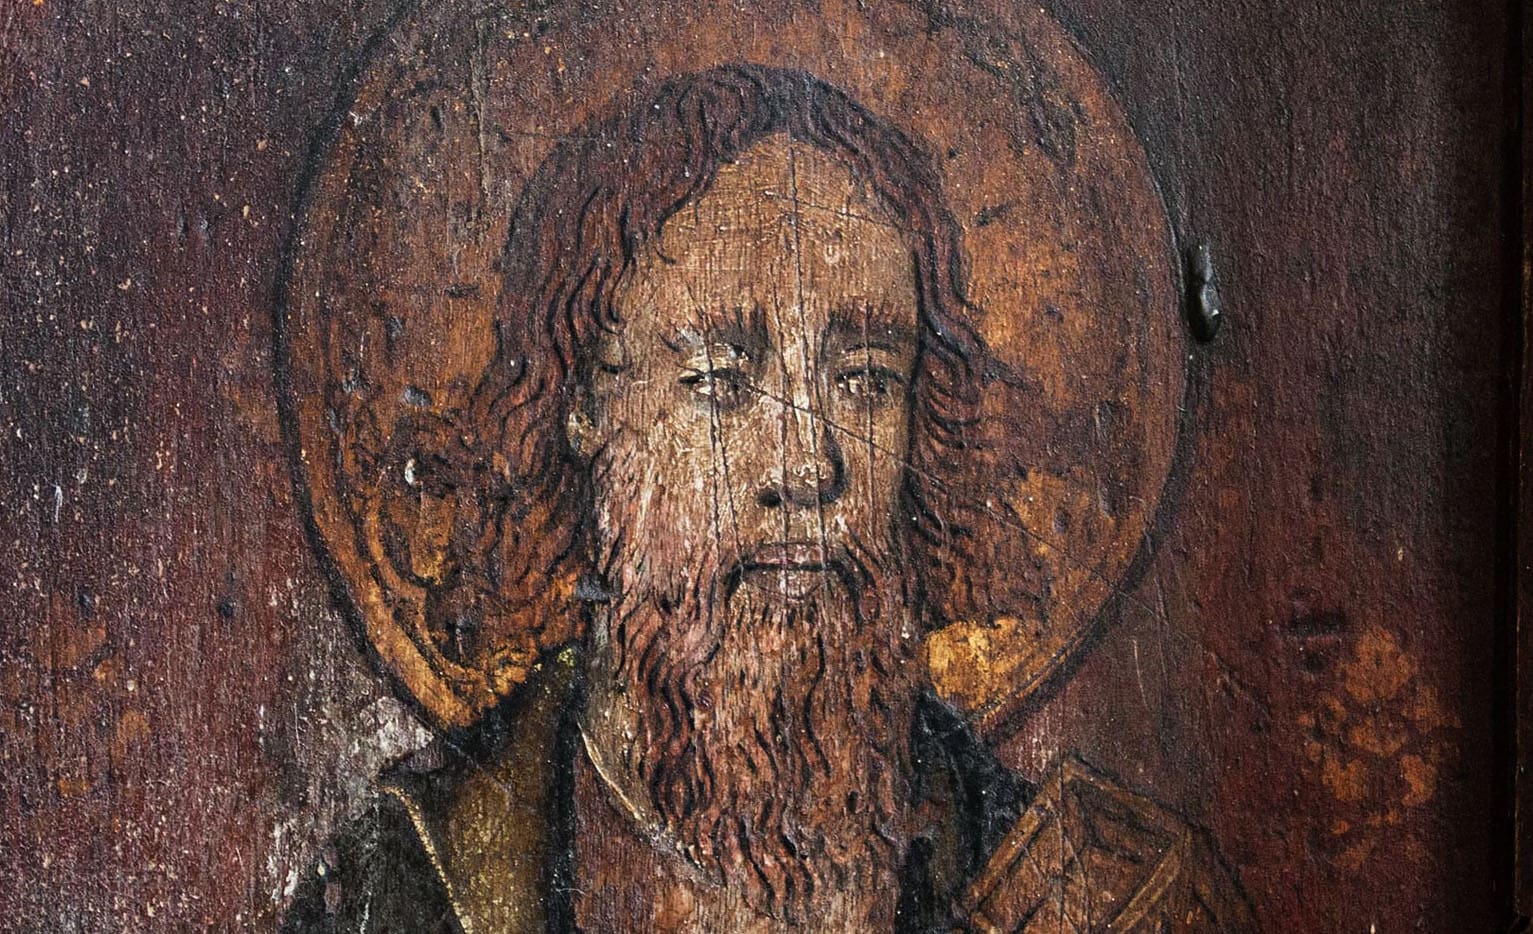 Painted saints – Digital conservation and visualisation